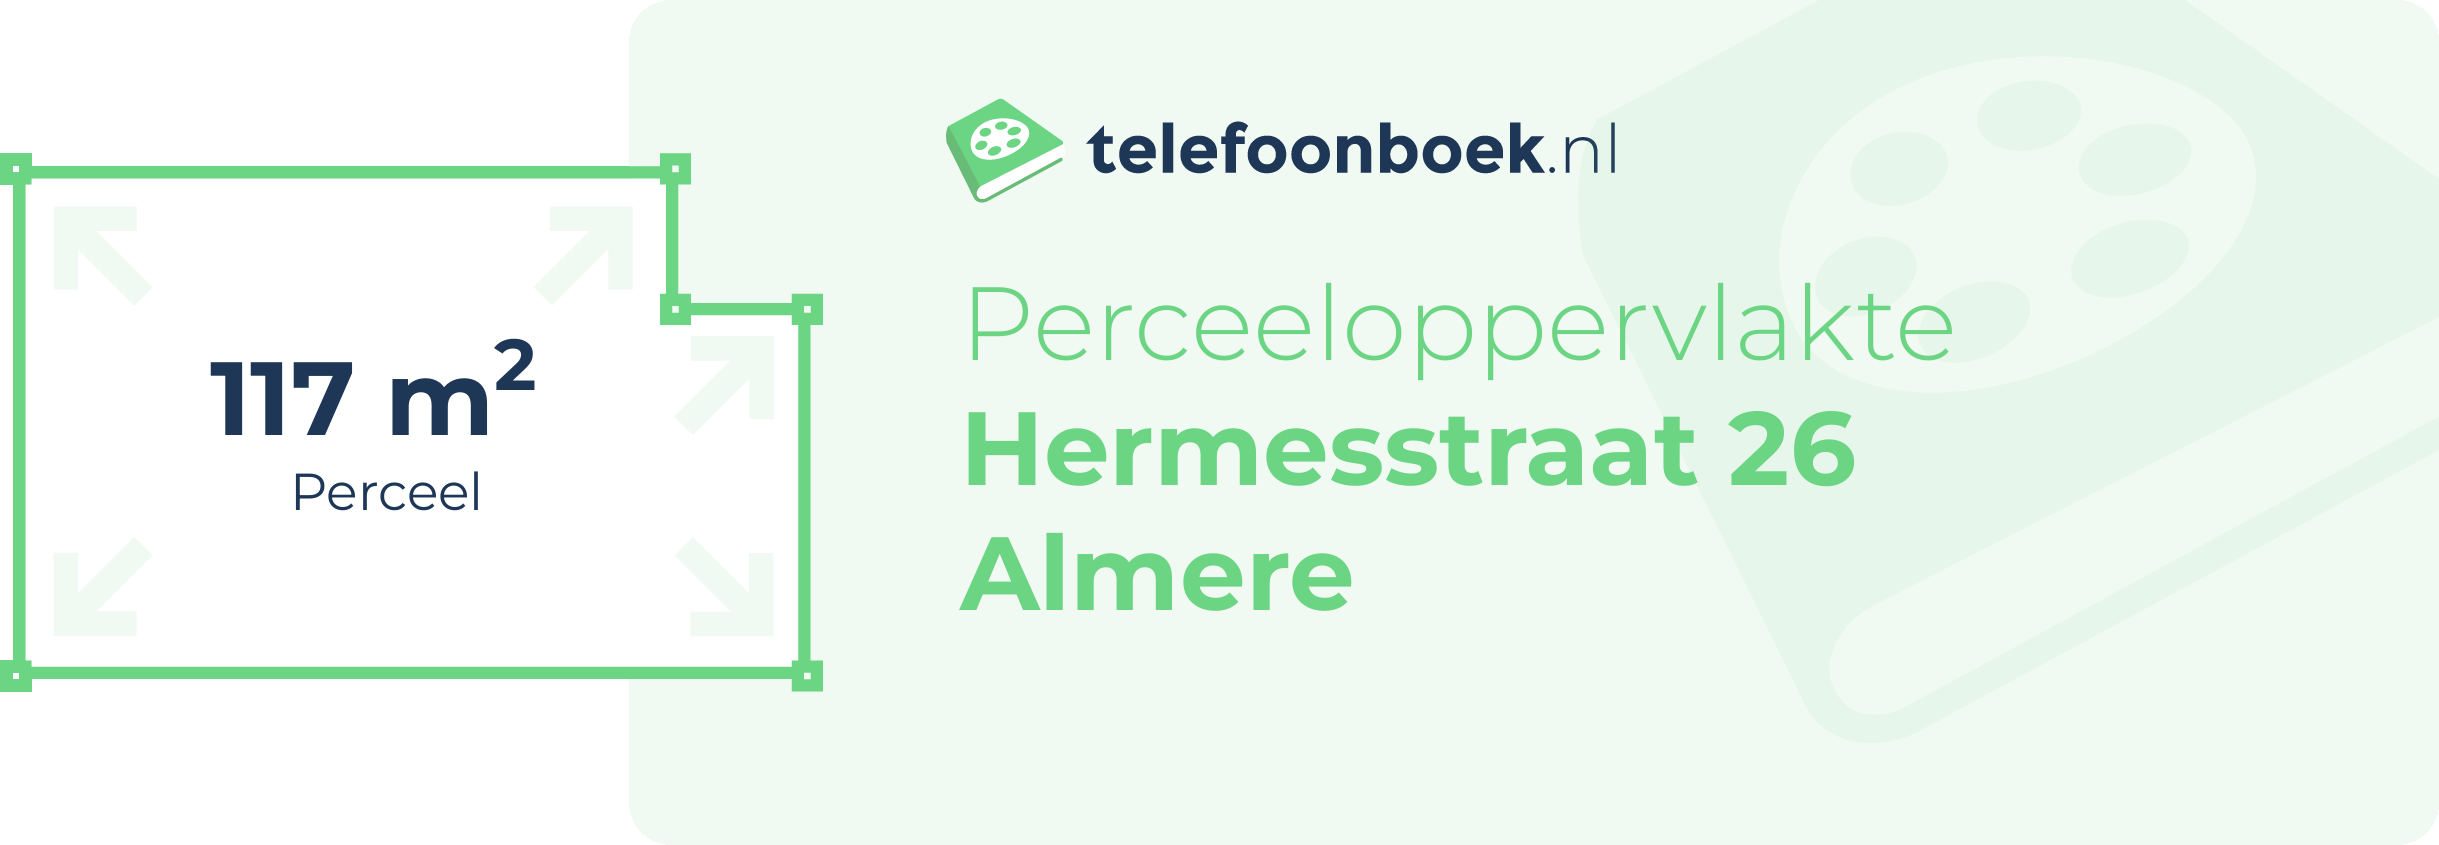 Perceeloppervlakte Hermesstraat 26 Almere